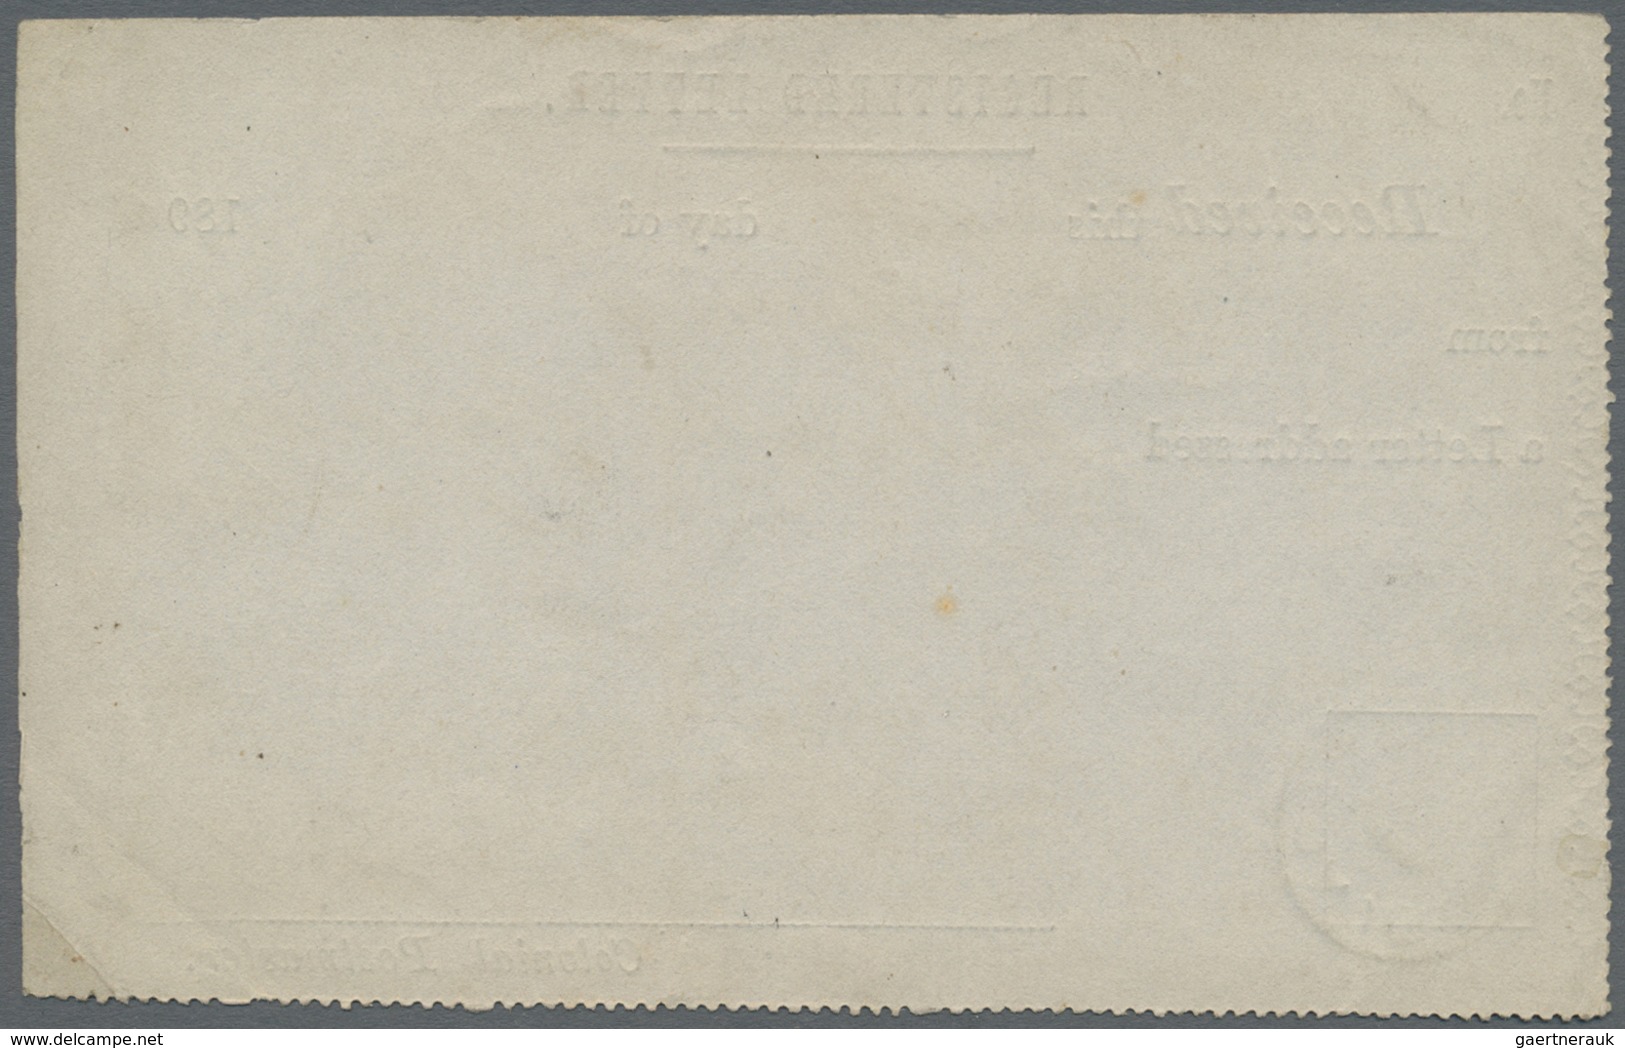 Br Grenada: 1890. Receipt Form For Registered Letter Cancelled By 'Grenada/D' (16/12) Date Stamp In Blu - Grenada (...-1974)